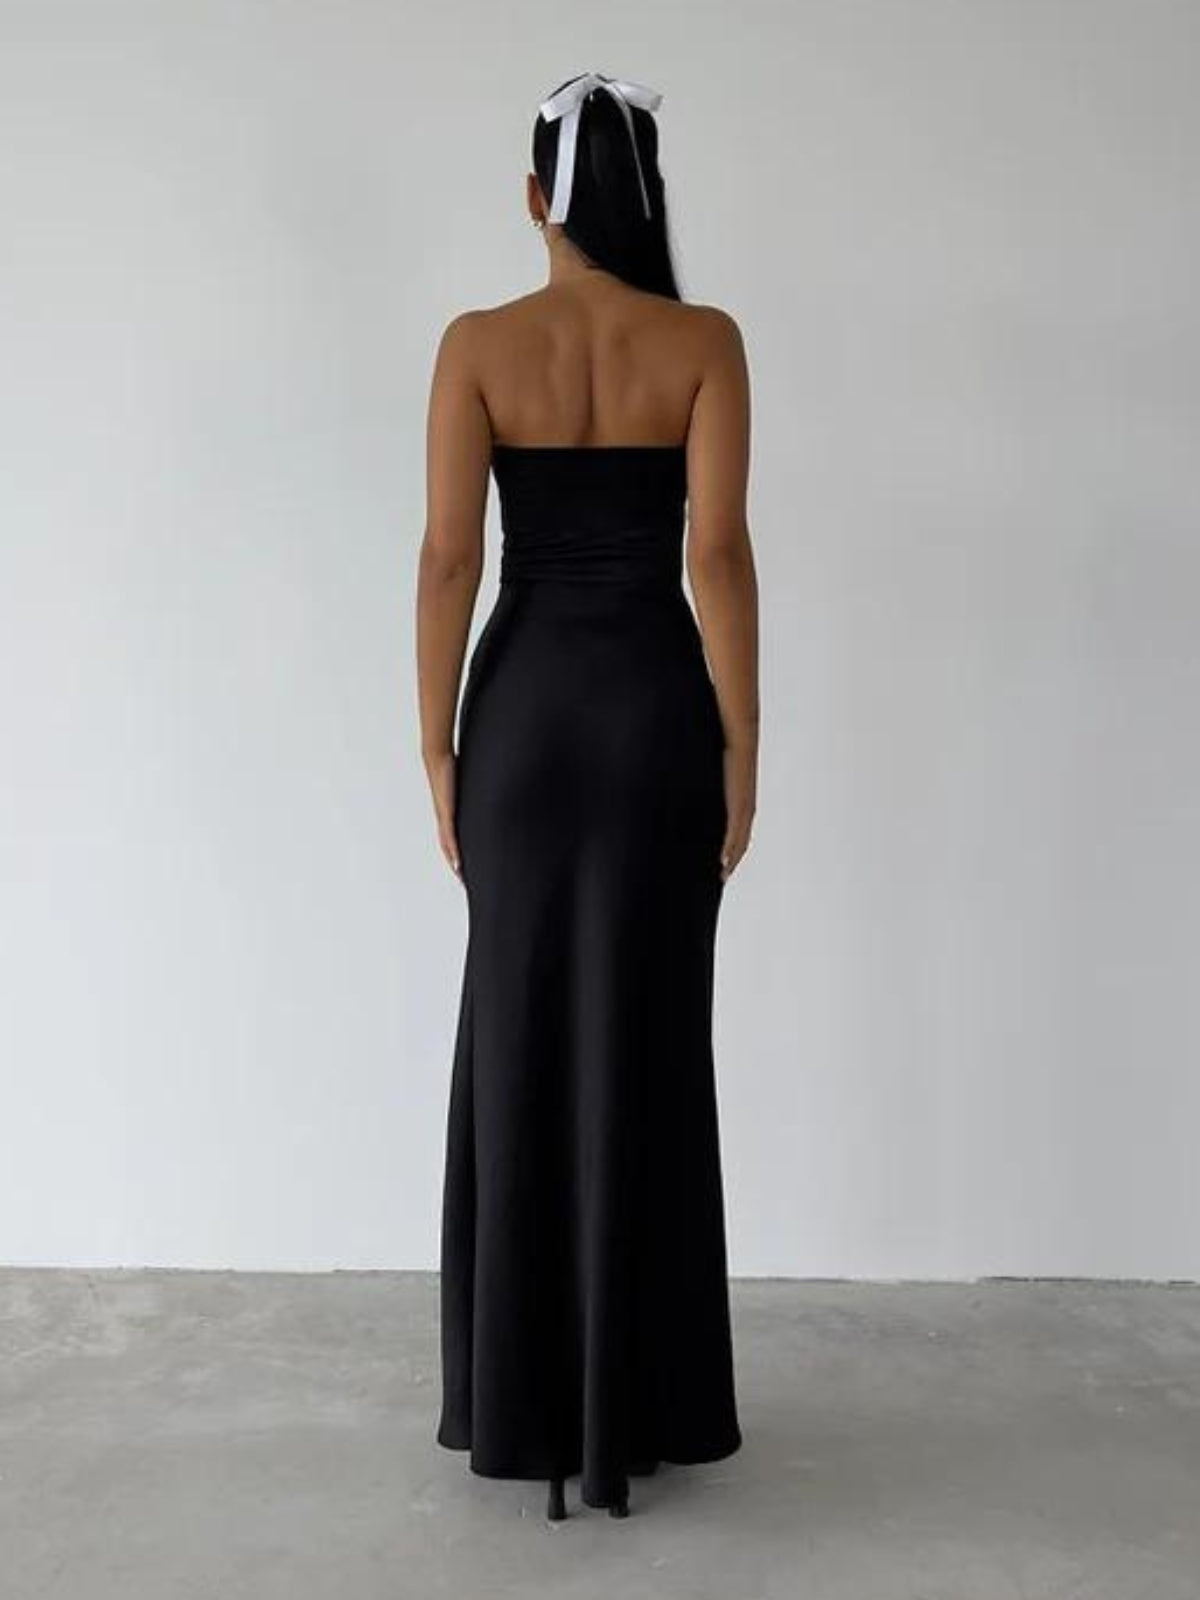 Bec + Bridge | Dreamer Strapless Dress - Black | Loan That Label